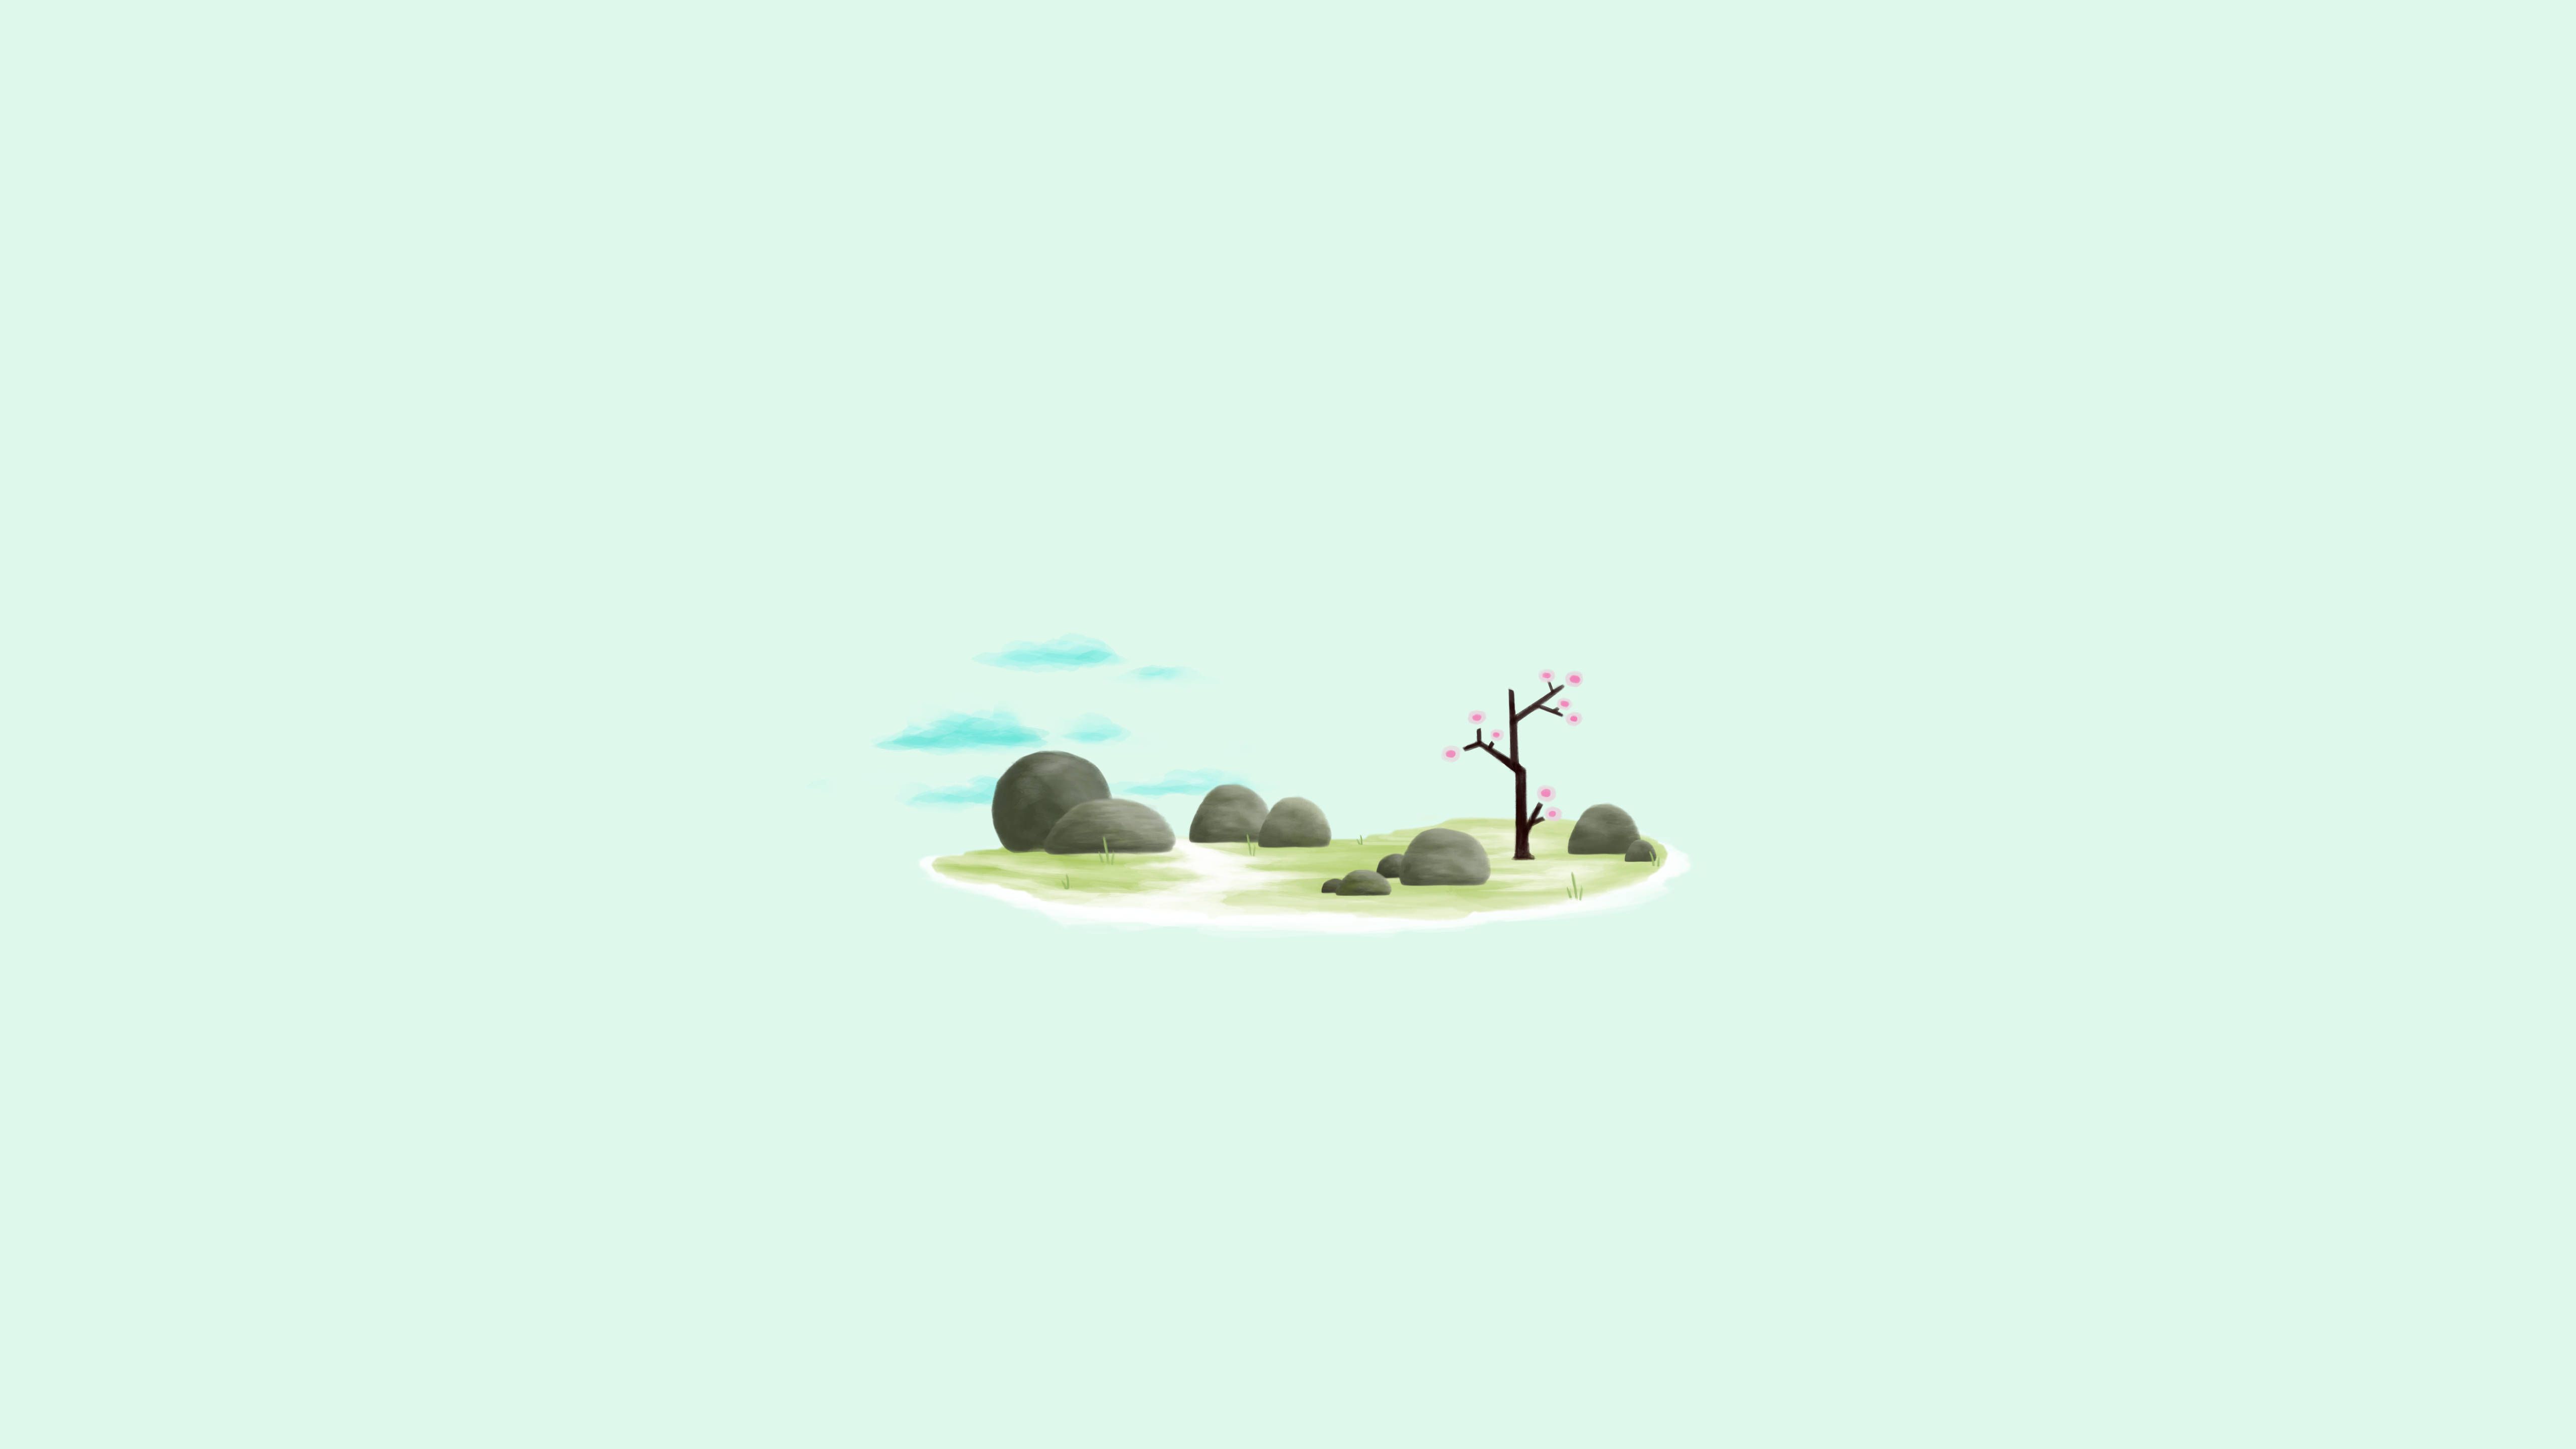 A tree and rocks on the ground - Minimalist